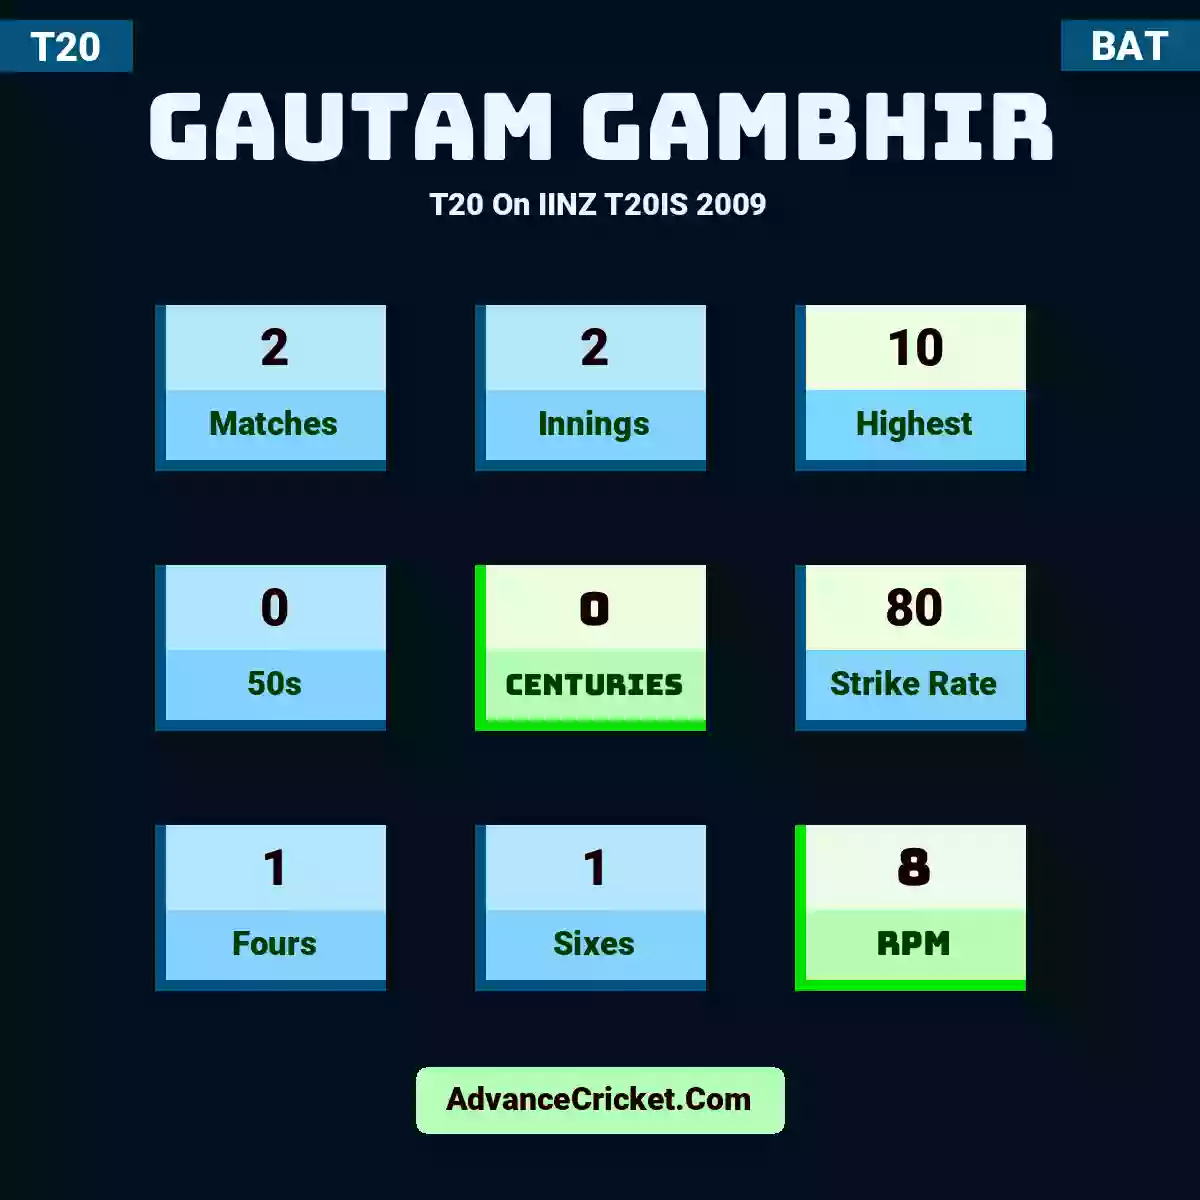 Gautam Gambhir T20  On IINZ T20IS 2009, Gautam Gambhir played 2 matches, scored 10 runs as highest, 0 half-centuries, and 0 centuries, with a strike rate of 80. G.Gambhir hit 1 fours and 1 sixes, with an RPM of 8.